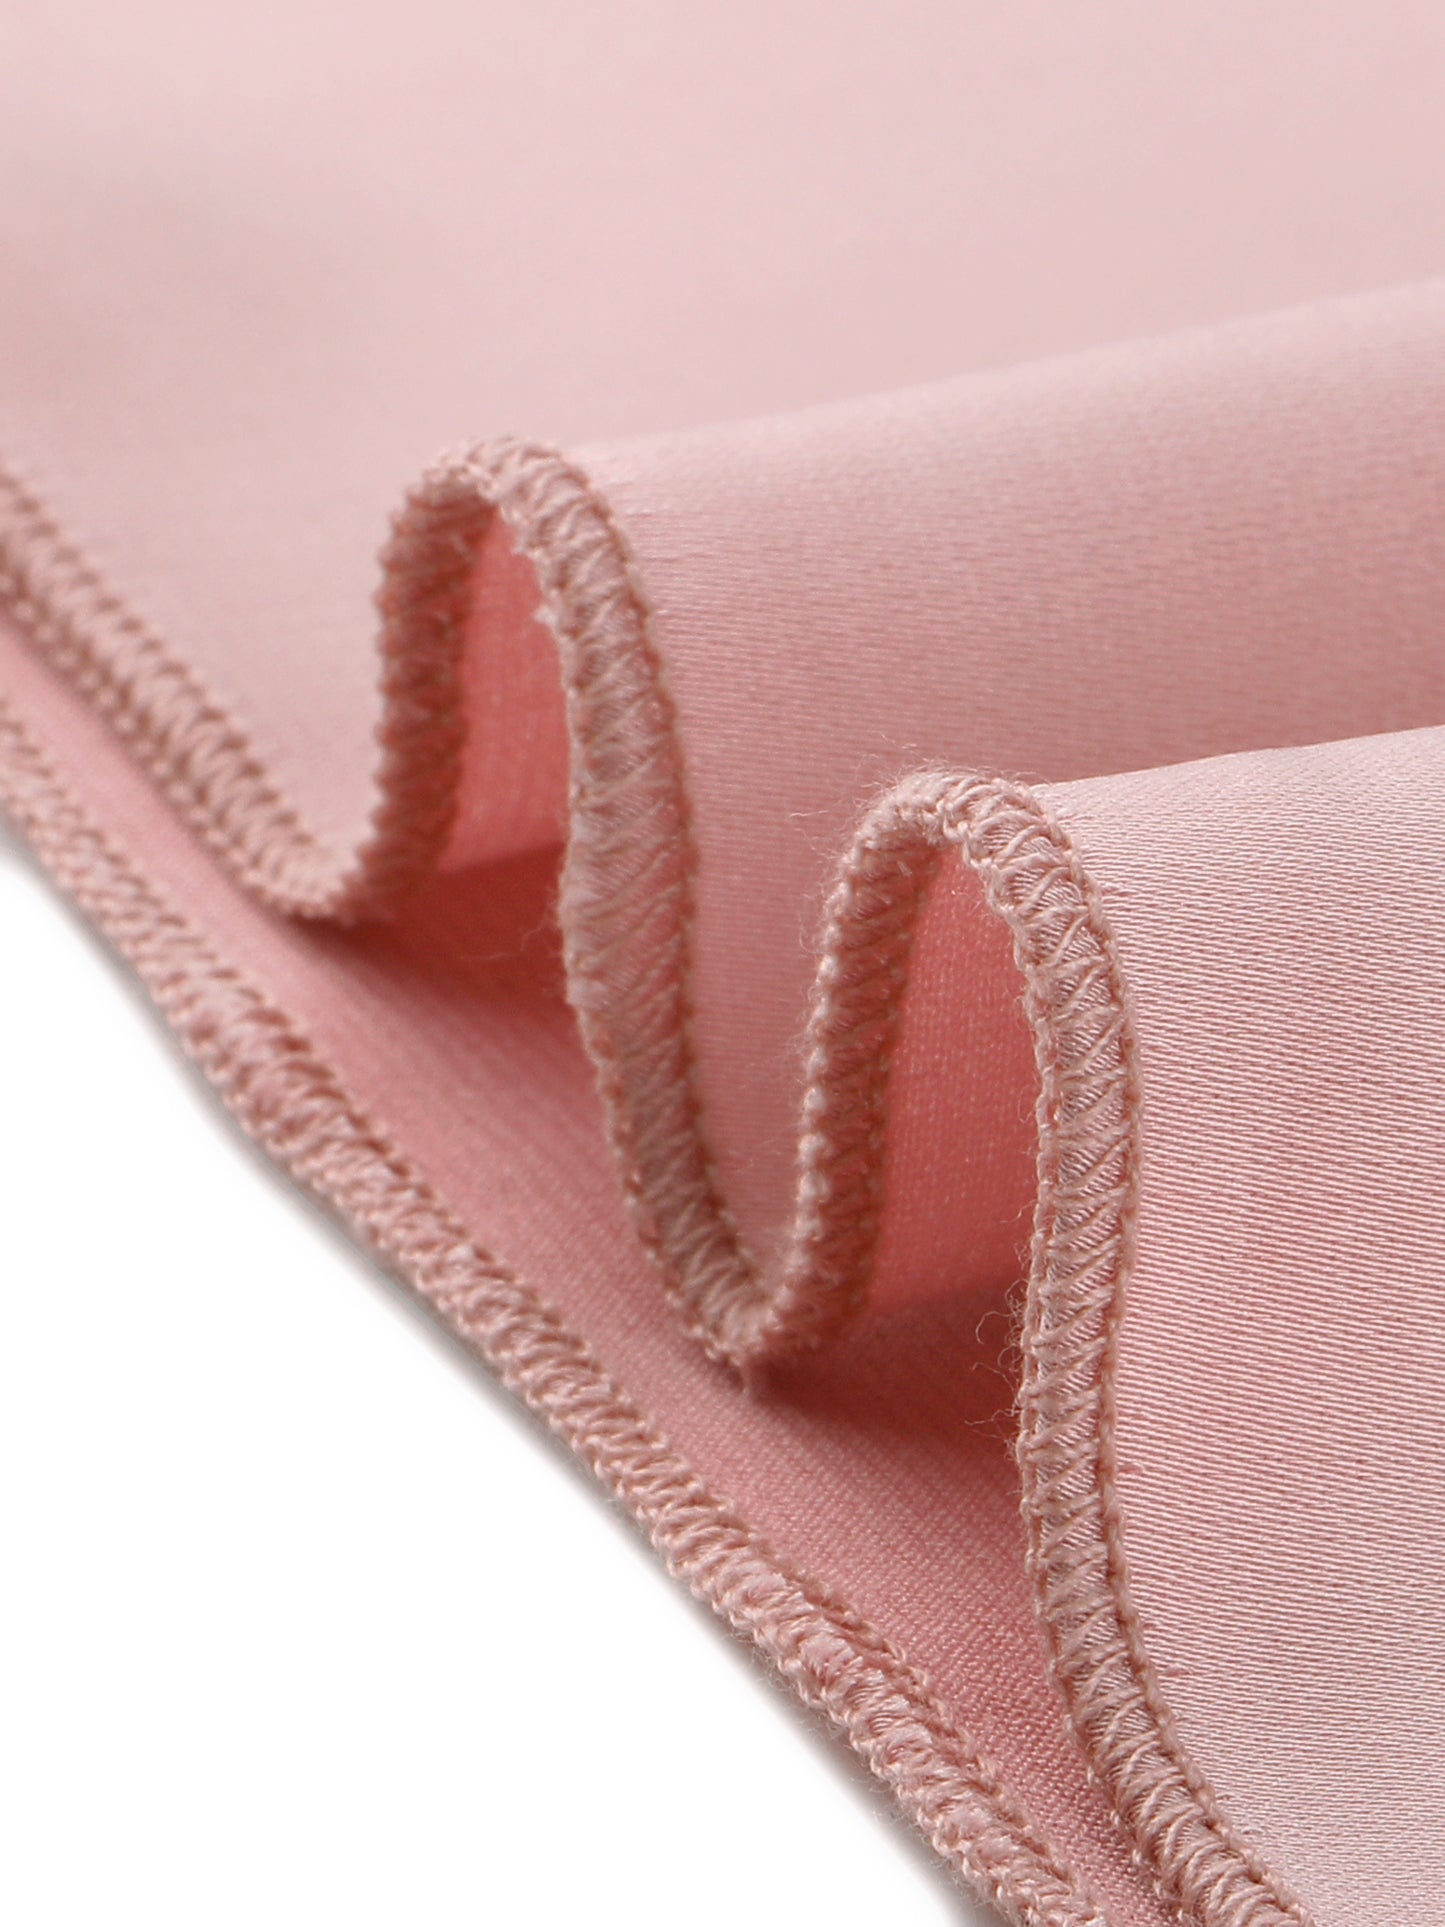 cheibear Satin Lingerie Lace Trim Cami Tops Shorts Sleepwear Pajamas Sets Pink